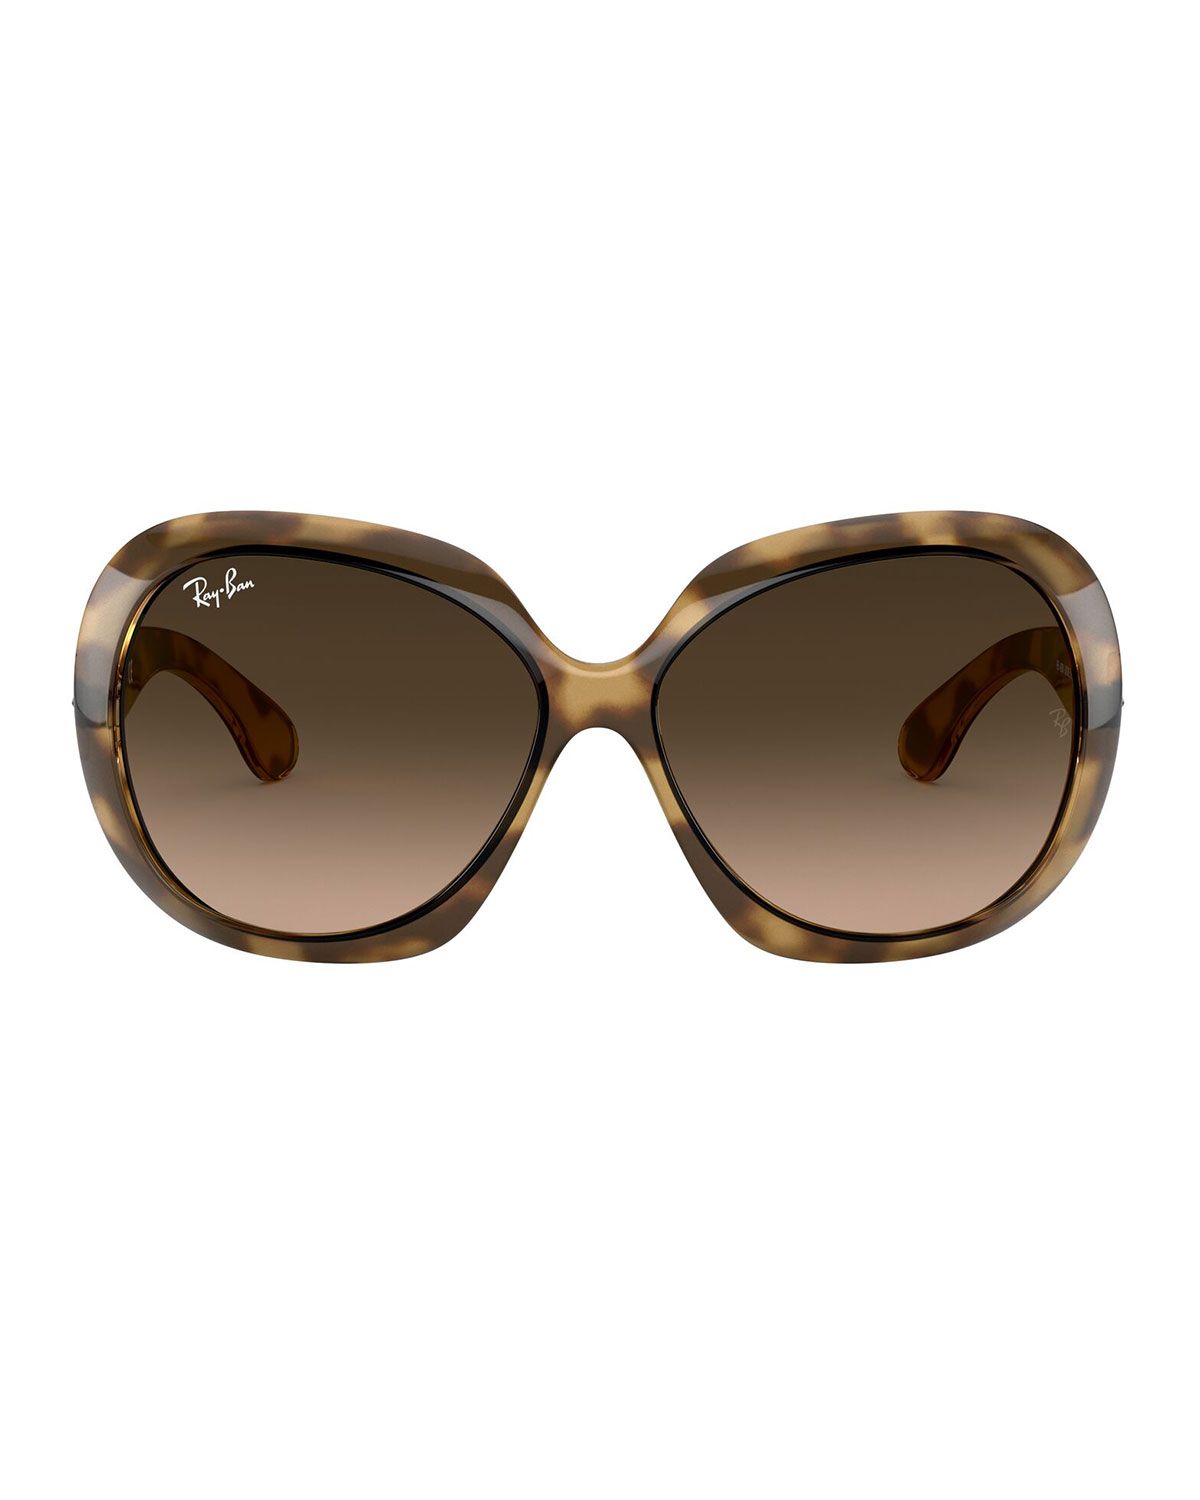 Ray-Ban Jackie Ohh II Nylon Butterfly Sunglasses | Neiman Marcus